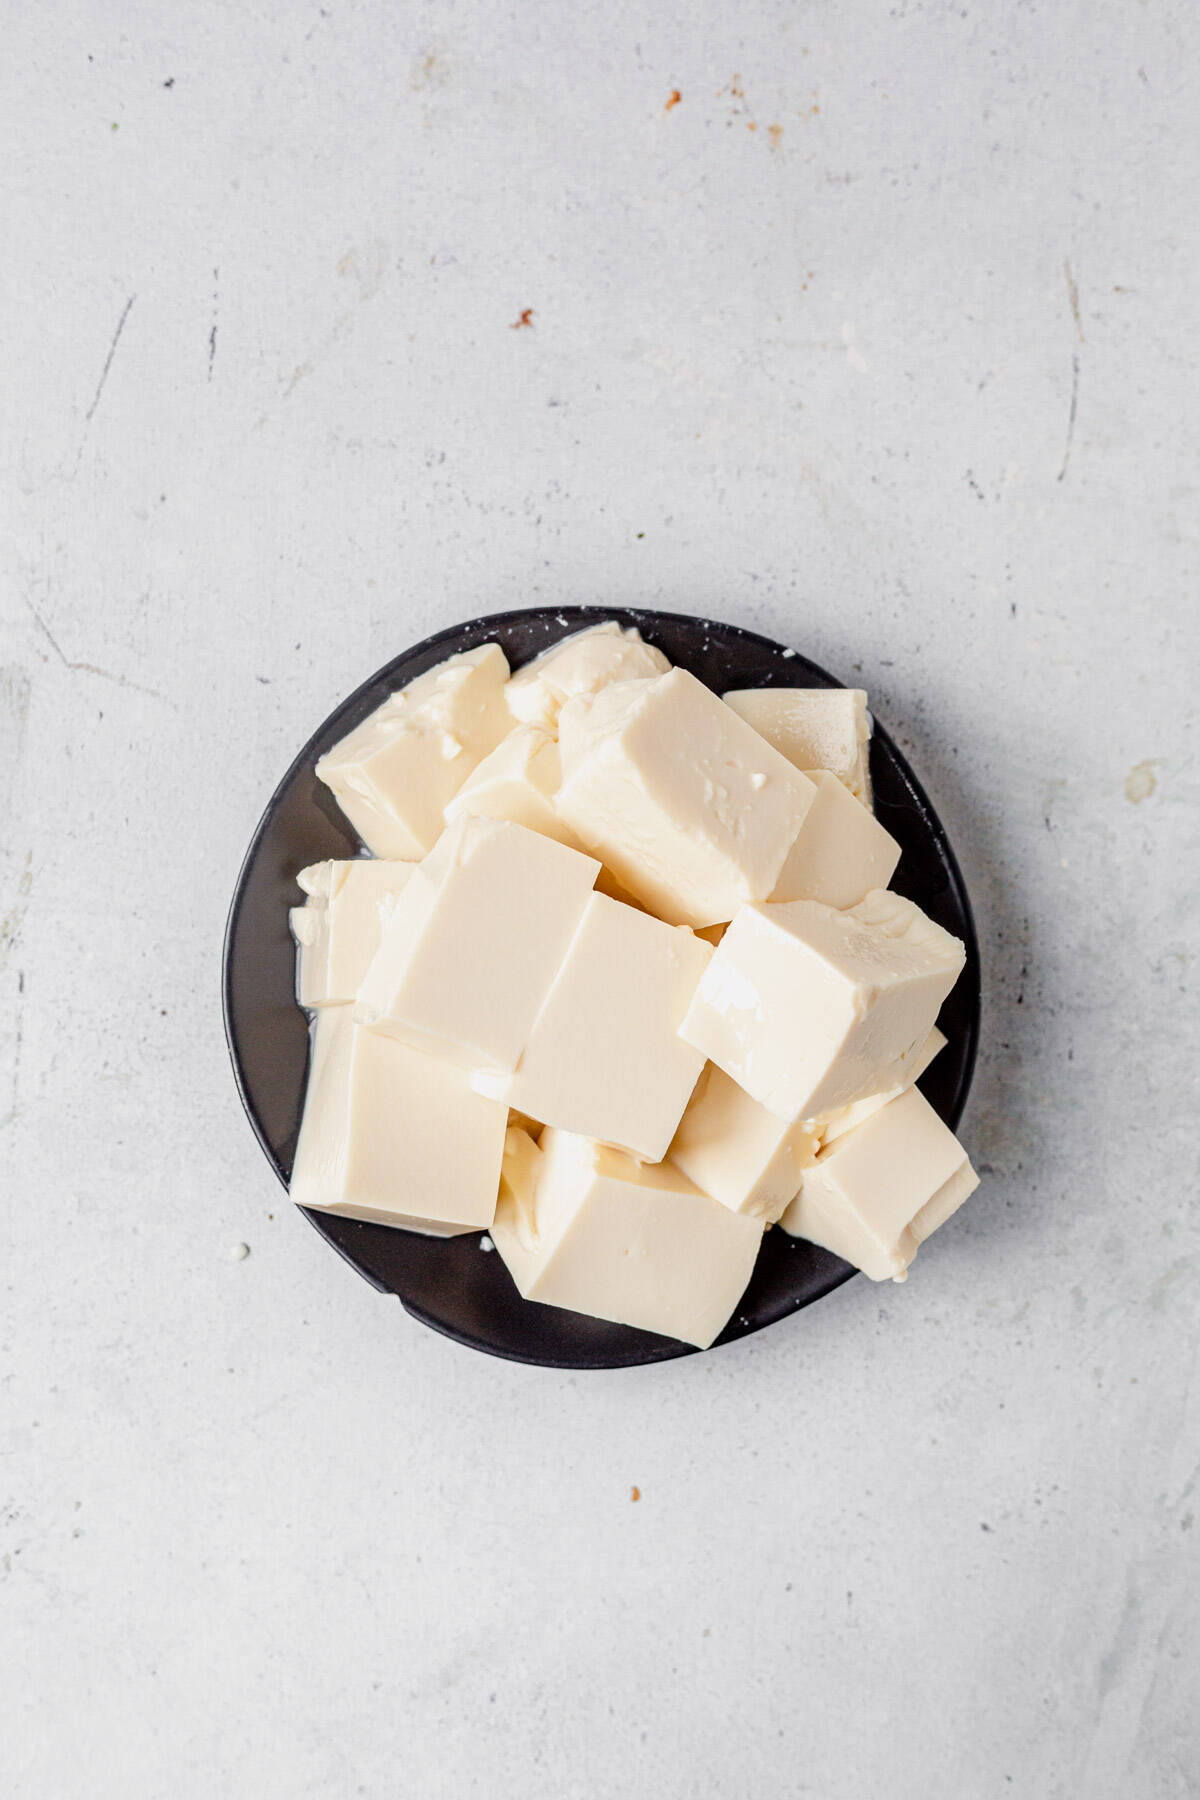 silken tofu on a plate